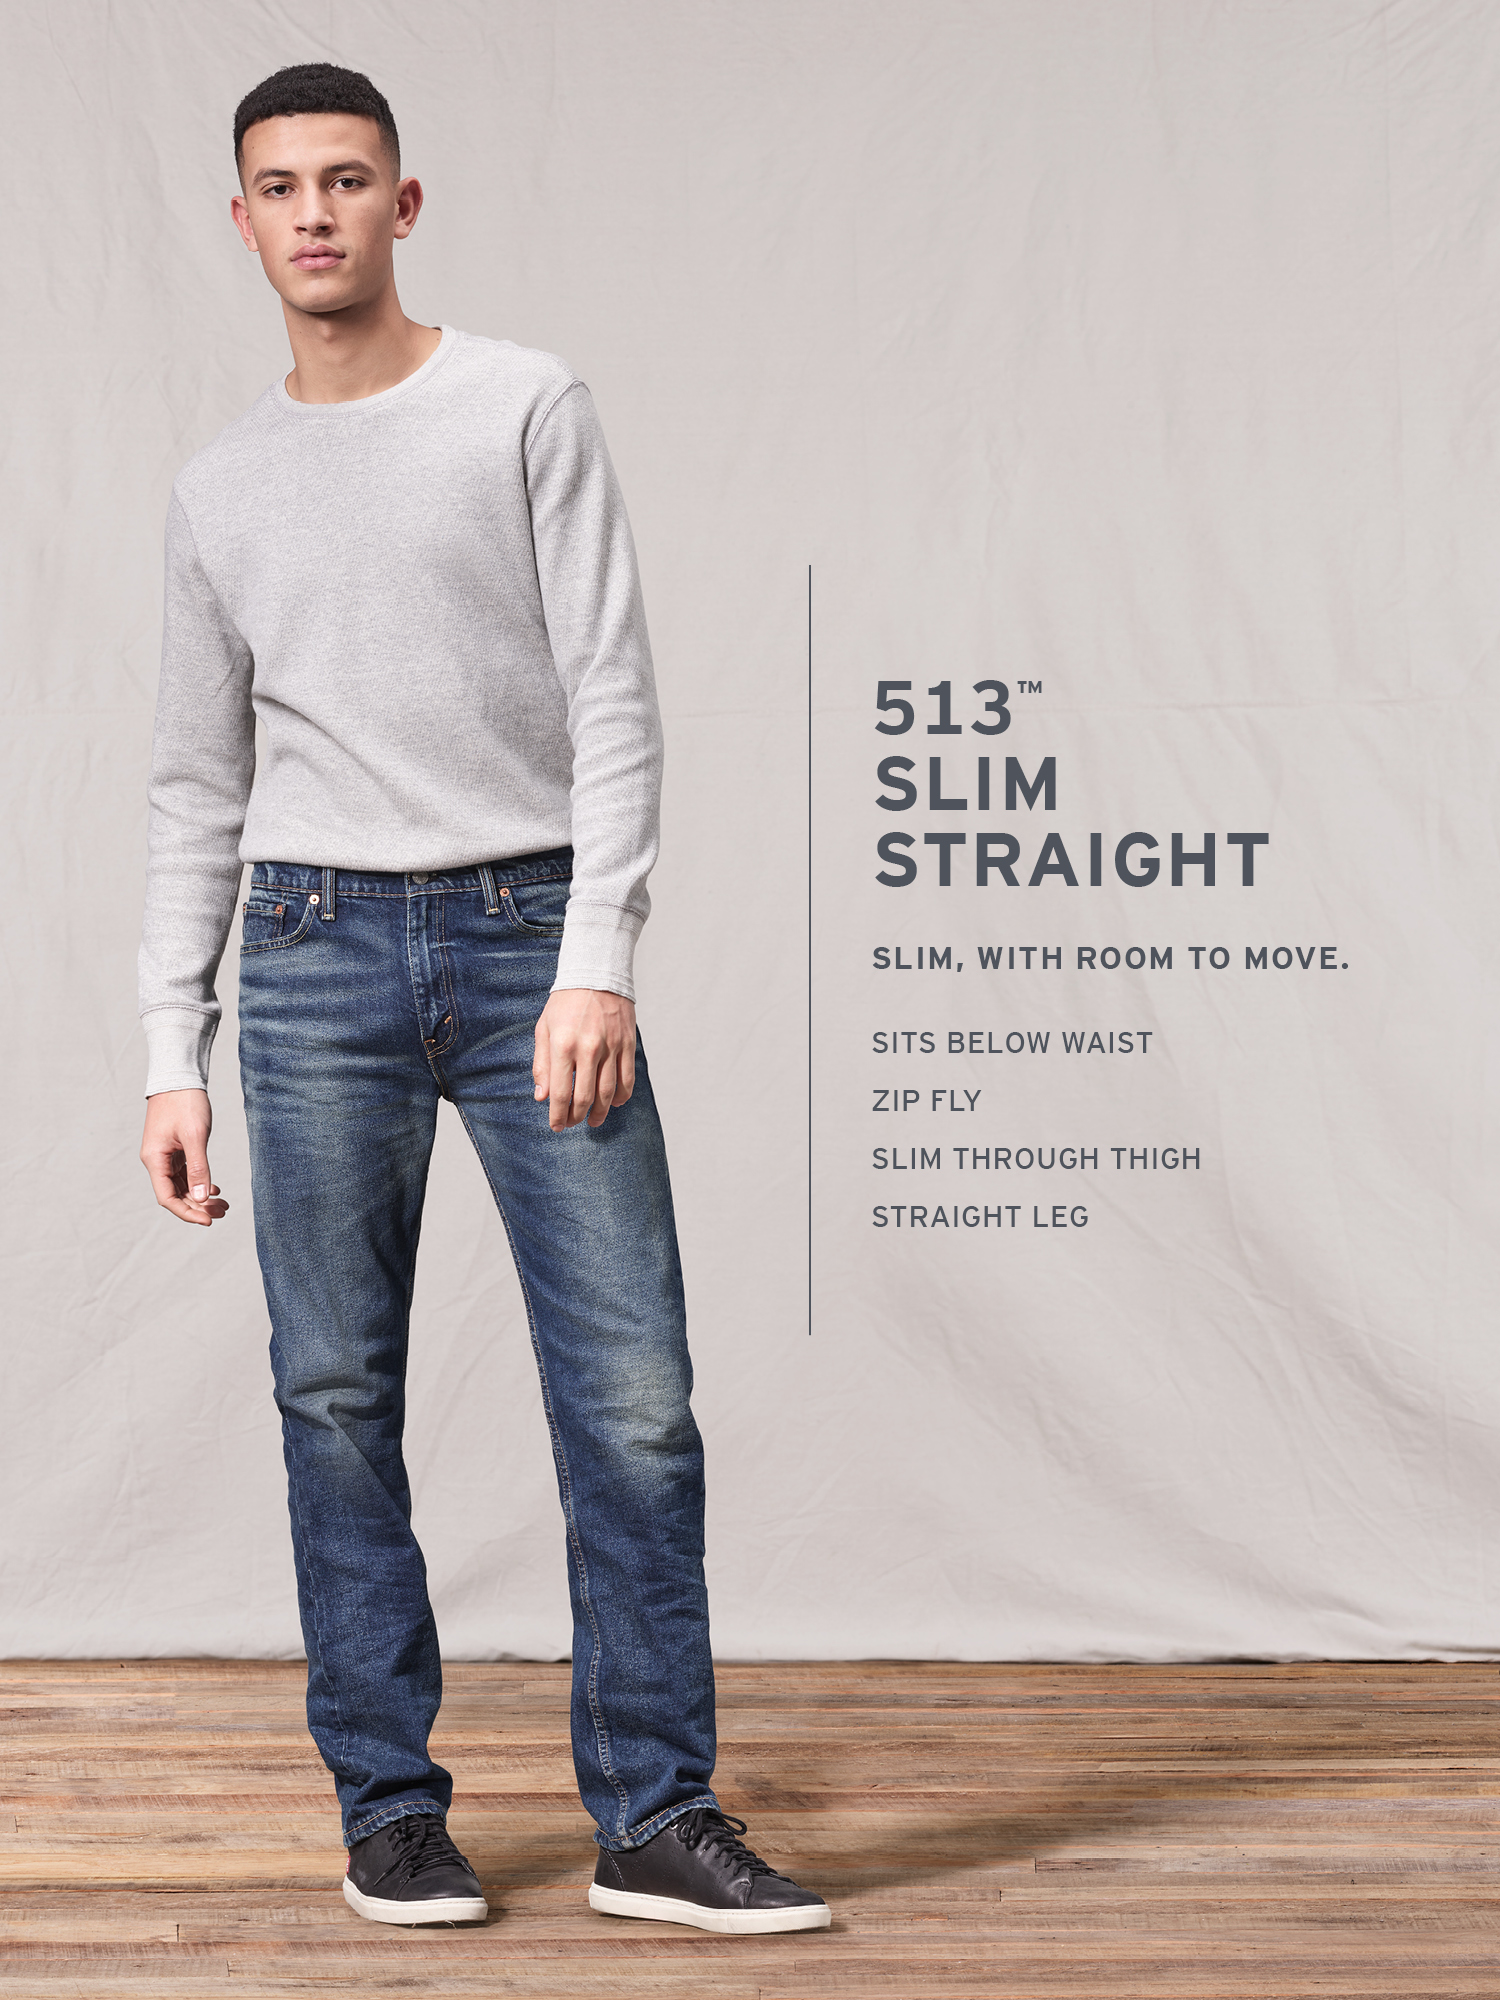 Levi's Men's 513 Slim Straight Fit Jeans - image 5 of 7